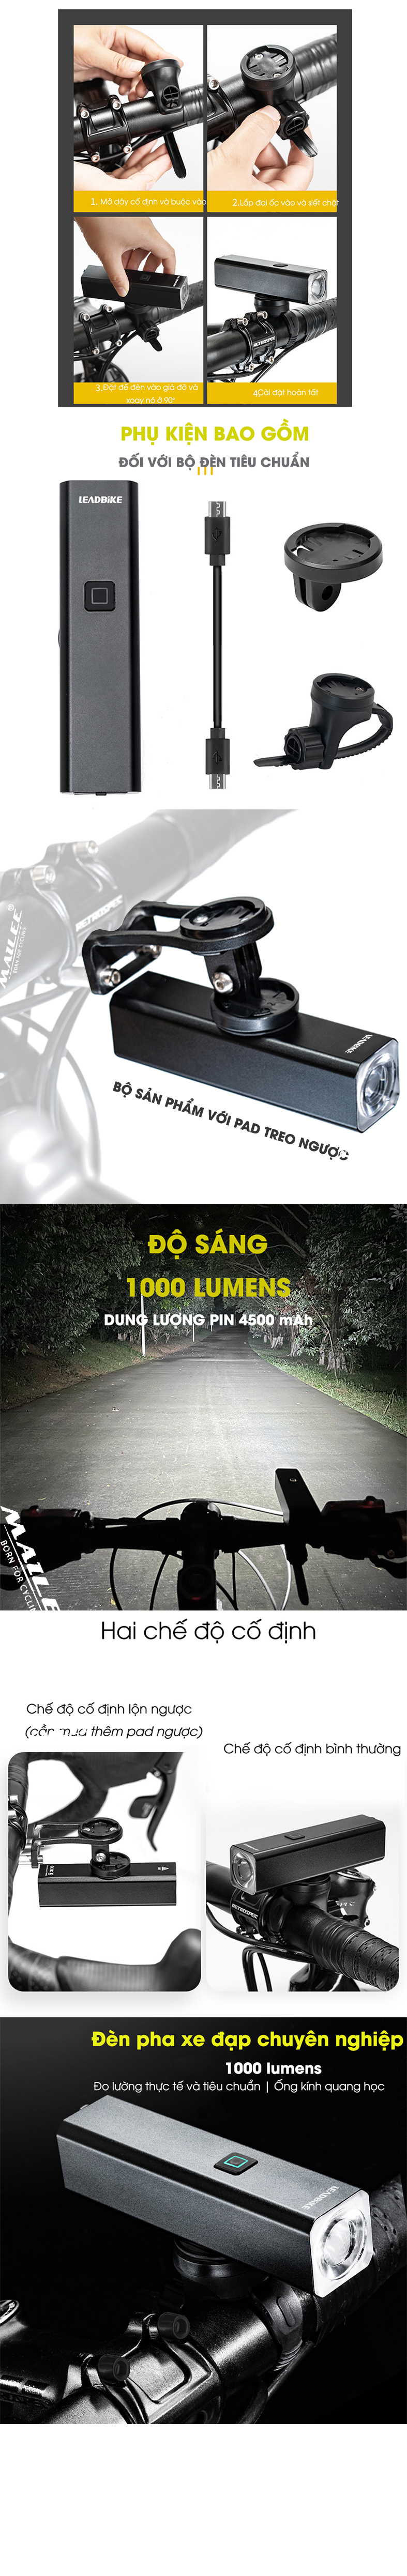 Den-xe-dap-LD-86A-sieu-sang-1000-lumen